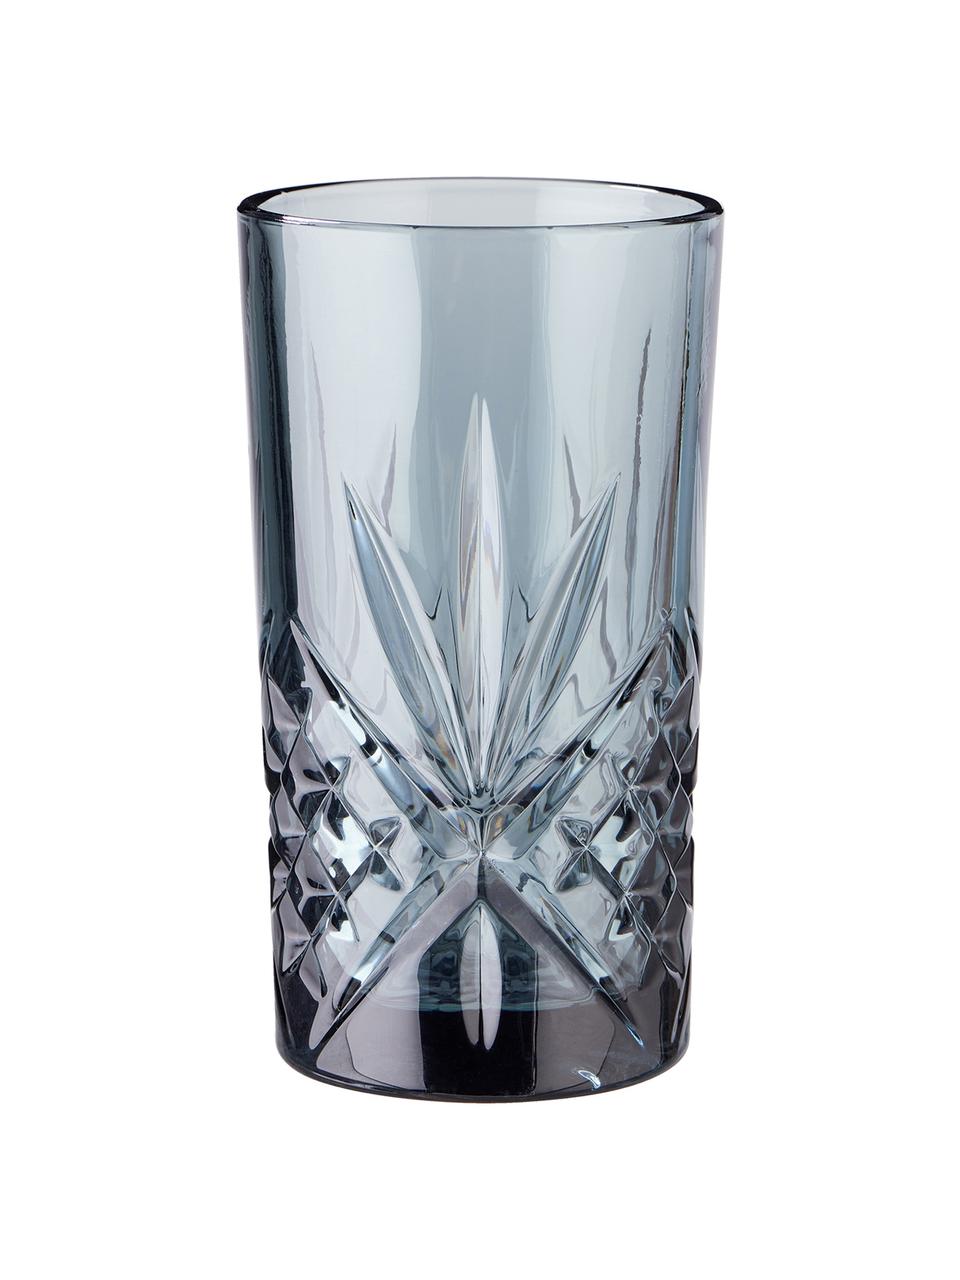 Longdrinkgläser Crystal Club mit Kristallrelief, 4 Stück, Glas, Grau, Ø 8 x H 14 cm